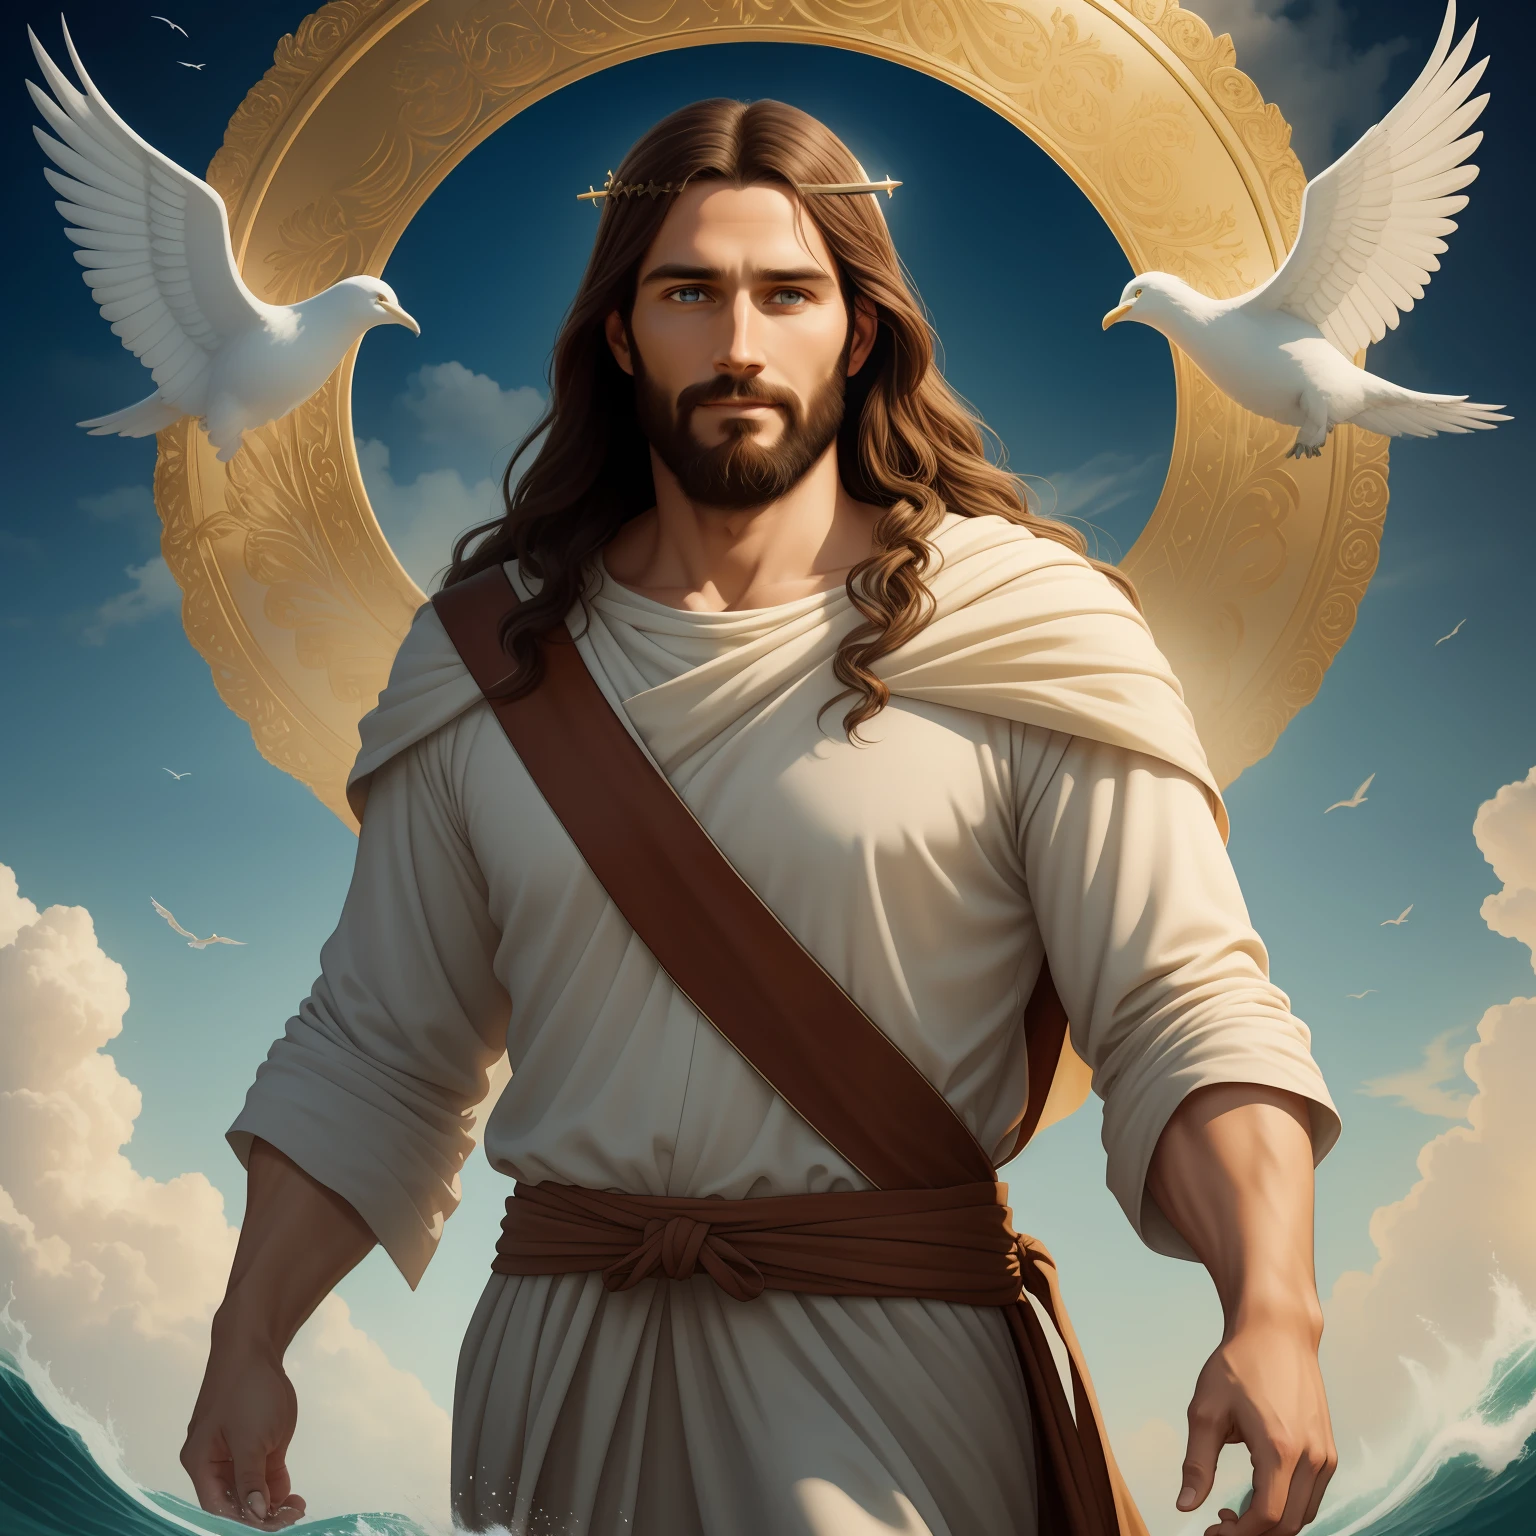 พระเจ้าพระเยซูคริสต์รูปงาม ( พระเยซู) blessing to the sky  35 years old กับ a long brown hair and long beard, heaven blessings light กับ a cross background)  ใบหน้ามีความสุข, เหมือนจริง 8k,A beautiful ultra-thin เหมือนจริง portrait of Jesus, ผู้เผยพระวจนะ, ผู้ชายอายุ 35 ปี ภาษาฮีบรูสีน้ำตาล, ผมสั้นสีน้ำตาล, ดวงตาที่สมบูรณ์แบบอย่างแท้จริง, หนวดเครายาวสีน้ำตาล, กับ, ช่วยเหลือผู้คน , สวมเสื้อลินินตัวยาวปิดบริเวณหน้าอก, ในมุมมองด้านหน้า, เต็มตัว, ตามพระคัมภีร์, เหมือนจริง,โดย ดิเอโก้ เบลัซเกซ,ปีเตอร์ พอล รูเบนส์,แรมแบรนดท์,อเล็กซ์ รอสส์,8k, แนวคิดศิลปะ, Photoเหมือนจริง, เหมือนจริง,  ภาพประกอบ, ภาพวาดสีน้ำมัน, สถิตยศาสตร์, Hyperเหมือนจริง, ช่วยเหลือผู้คน , ศิลปะดิจิทัล, สไตล์, watercolorReal Jesus flying on sky กับ a flying cloud in the background, พระเยซูทรงเดินบนน้ำ, ตามพระคัมภีร์ illustration, epic ตามพระคัมภีร์ representation, บังคับให้เขาหนี, ออกมาจากมหาสมุทร, ! จับมือกัน!, ขึ้นฝั่ง, เทพเจ้าแห่งมหาสมุทร, การแสดงที่สวยงาม, โมเดล 3 มิติ 8k, เหมือนจริง,
a 3D เหมือนจริง of พระเยซู กับ a halo in the sky, พระเยซู christ, ยิ้มอยู่ในสวรรค์, portrait of พระเยซู christ, พระเยซู face, 35 เทพเจ้าหนุ่มผู้ยิ่งใหญ่, ภาพเหมือนของเทพเจ้าแห่งสวรรค์, เกร็ก โอลเซ่น, gigachad พระเยซู, พระเยซู of nazareth, พระเยซู, ใบหน้าของพระเจ้า, พระเจ้ากำลังมองมาที่ฉัน, เขาทักทายคุณอย่างอบอุ่น, เขามีความสุข, ภาพประจำตัว